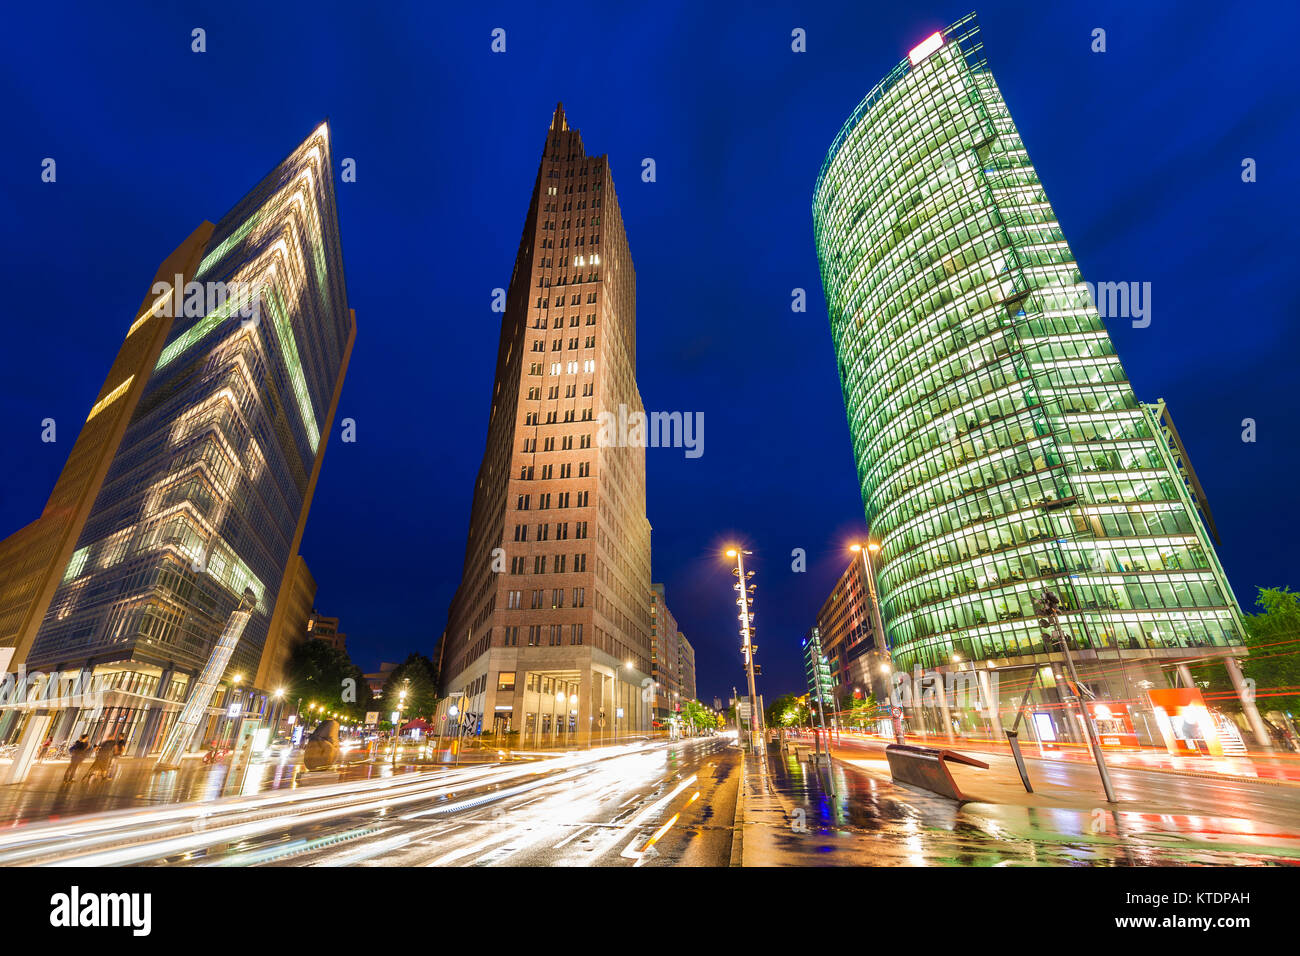 Deutschland, Berlin, Potsdamer Platz, Kollhoff-Tower, Bahntower, Hochhäuser, Verkehr Stock Photo